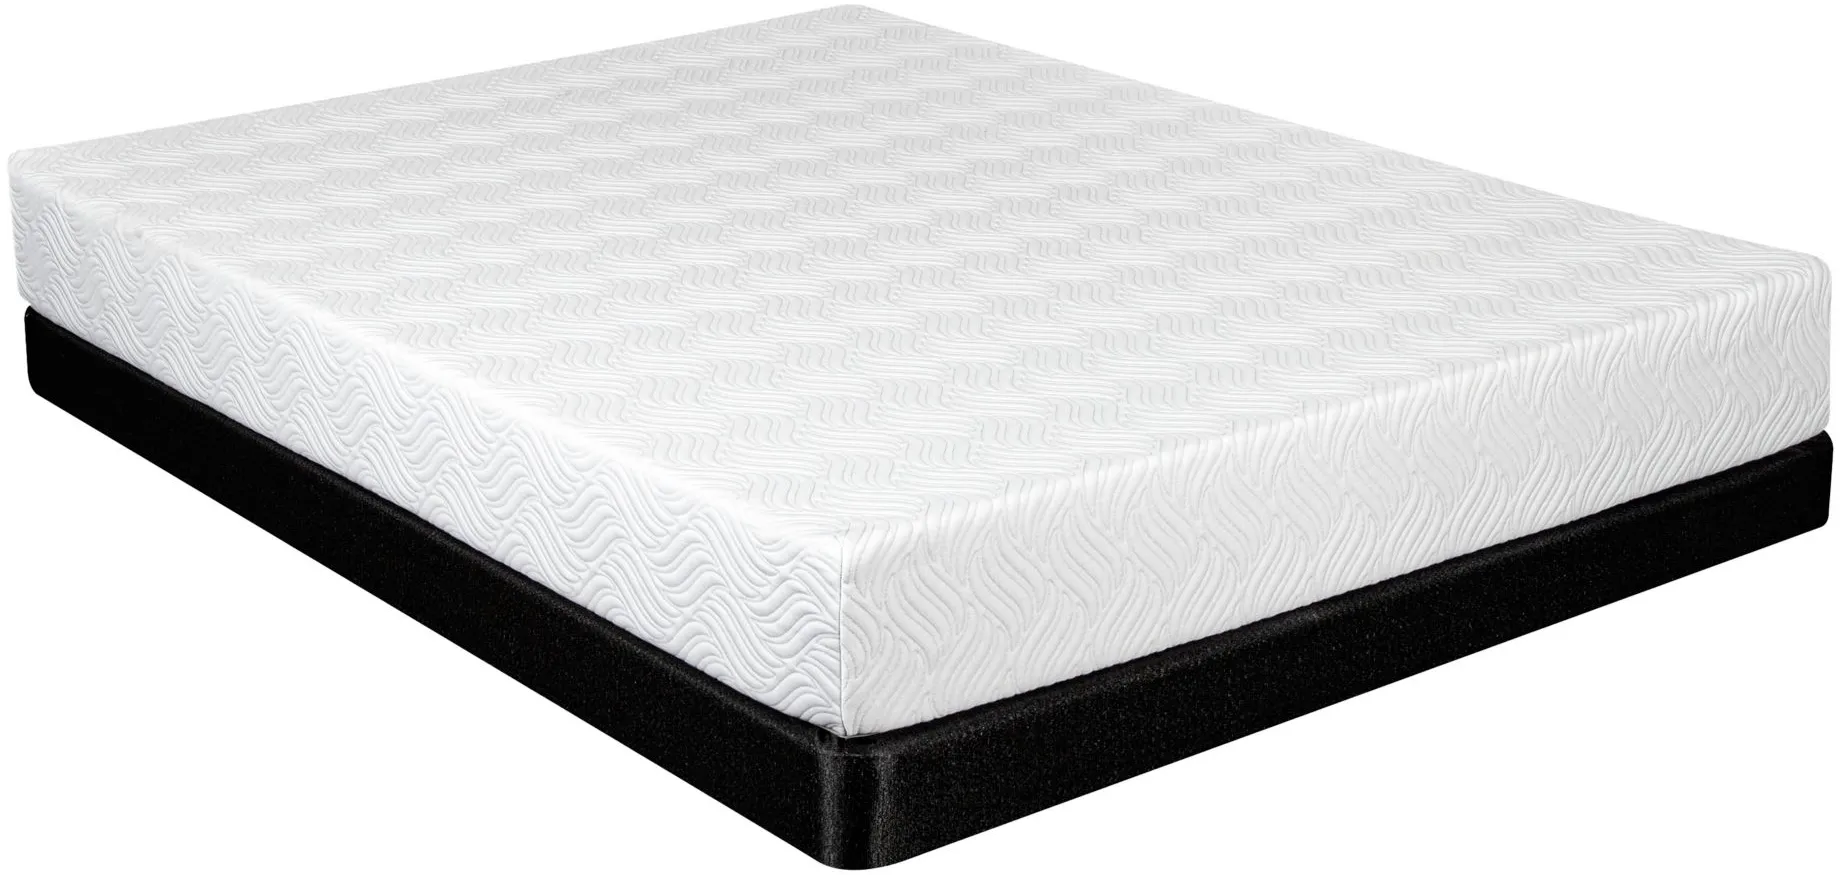 bellanest imperial euro top mattress reviews